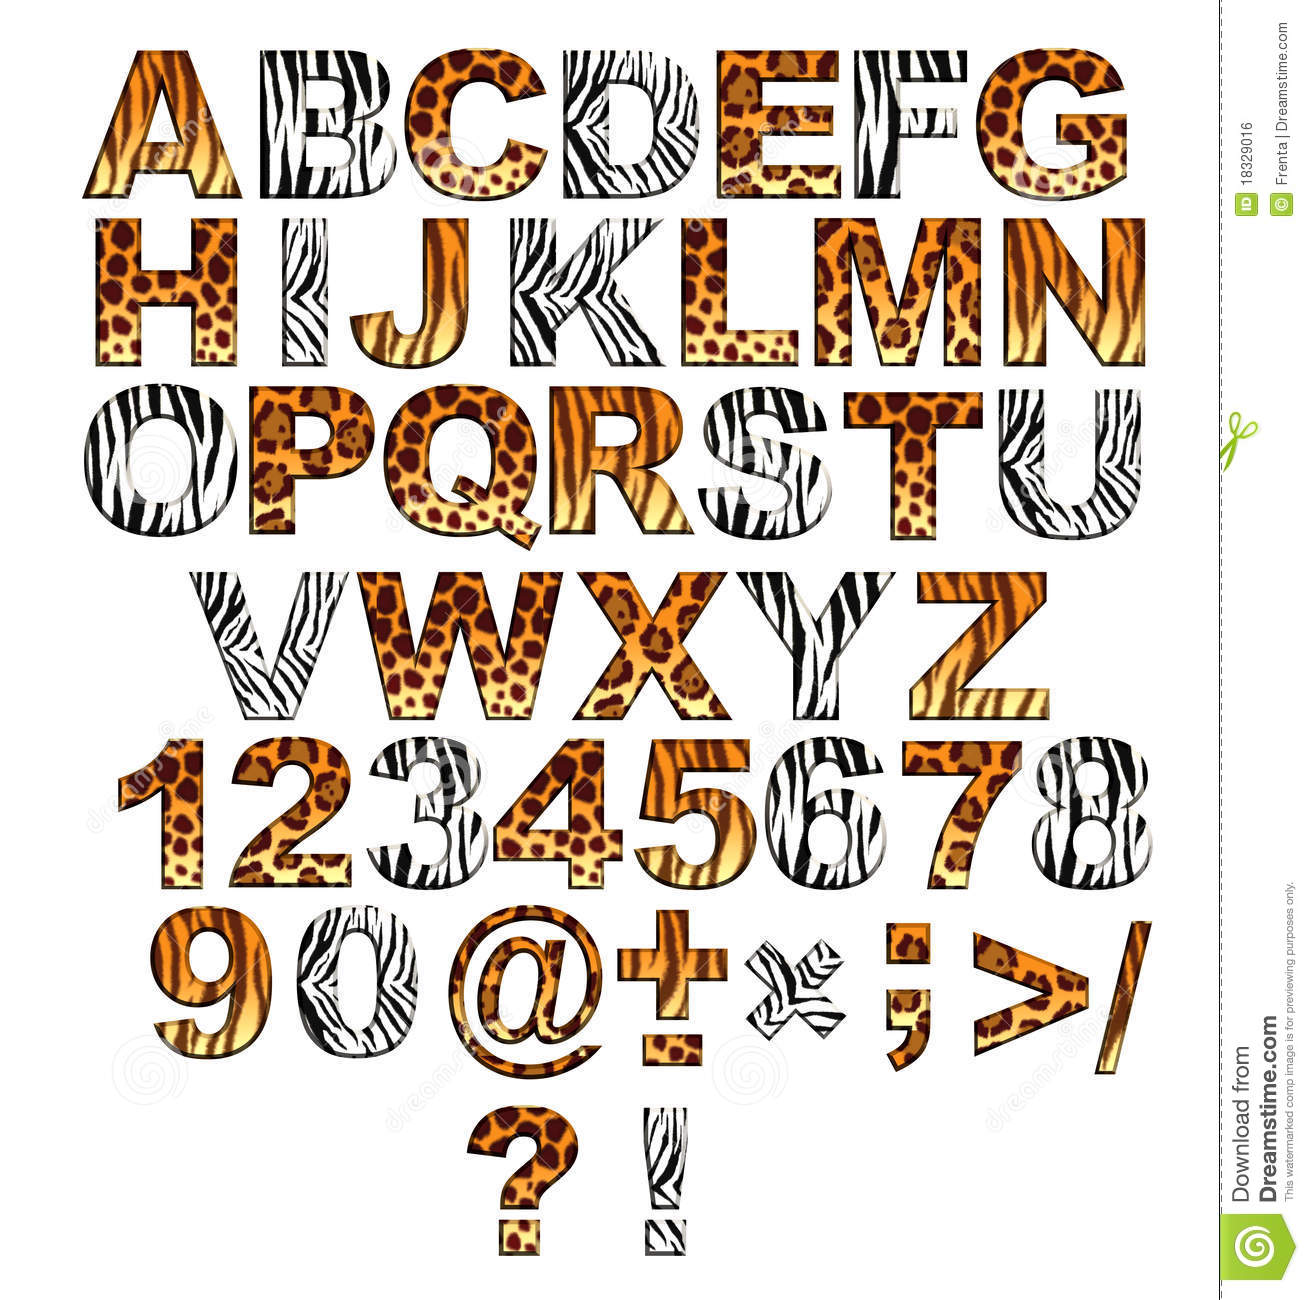 10 Safari Animal Font Images Zoo Animal Alphabet Letters Animal 